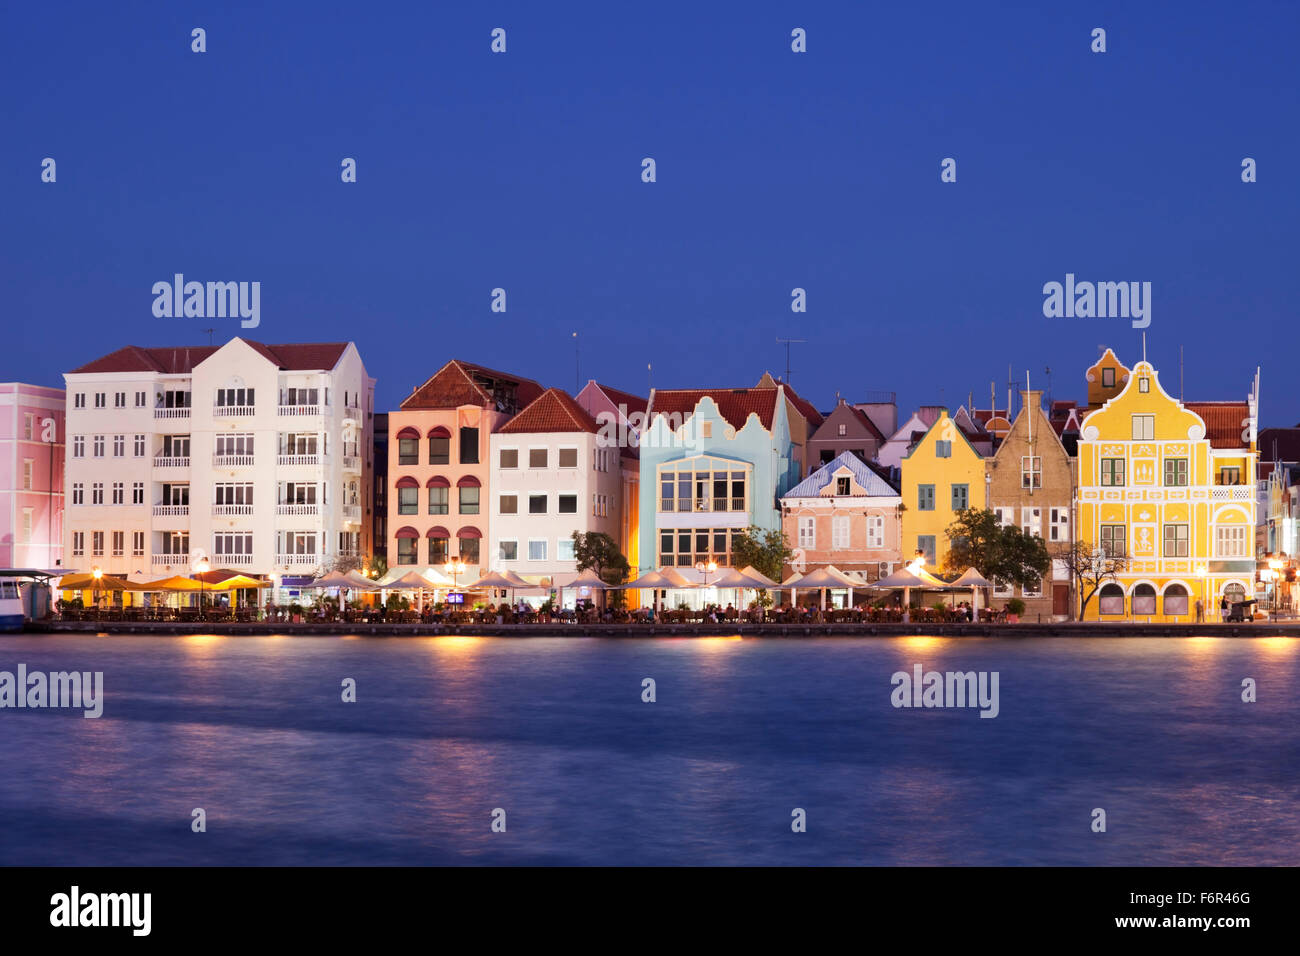 Le case colorate di Willemstad, Curaçao nelle Antille olandesi di notte. Foto Stock